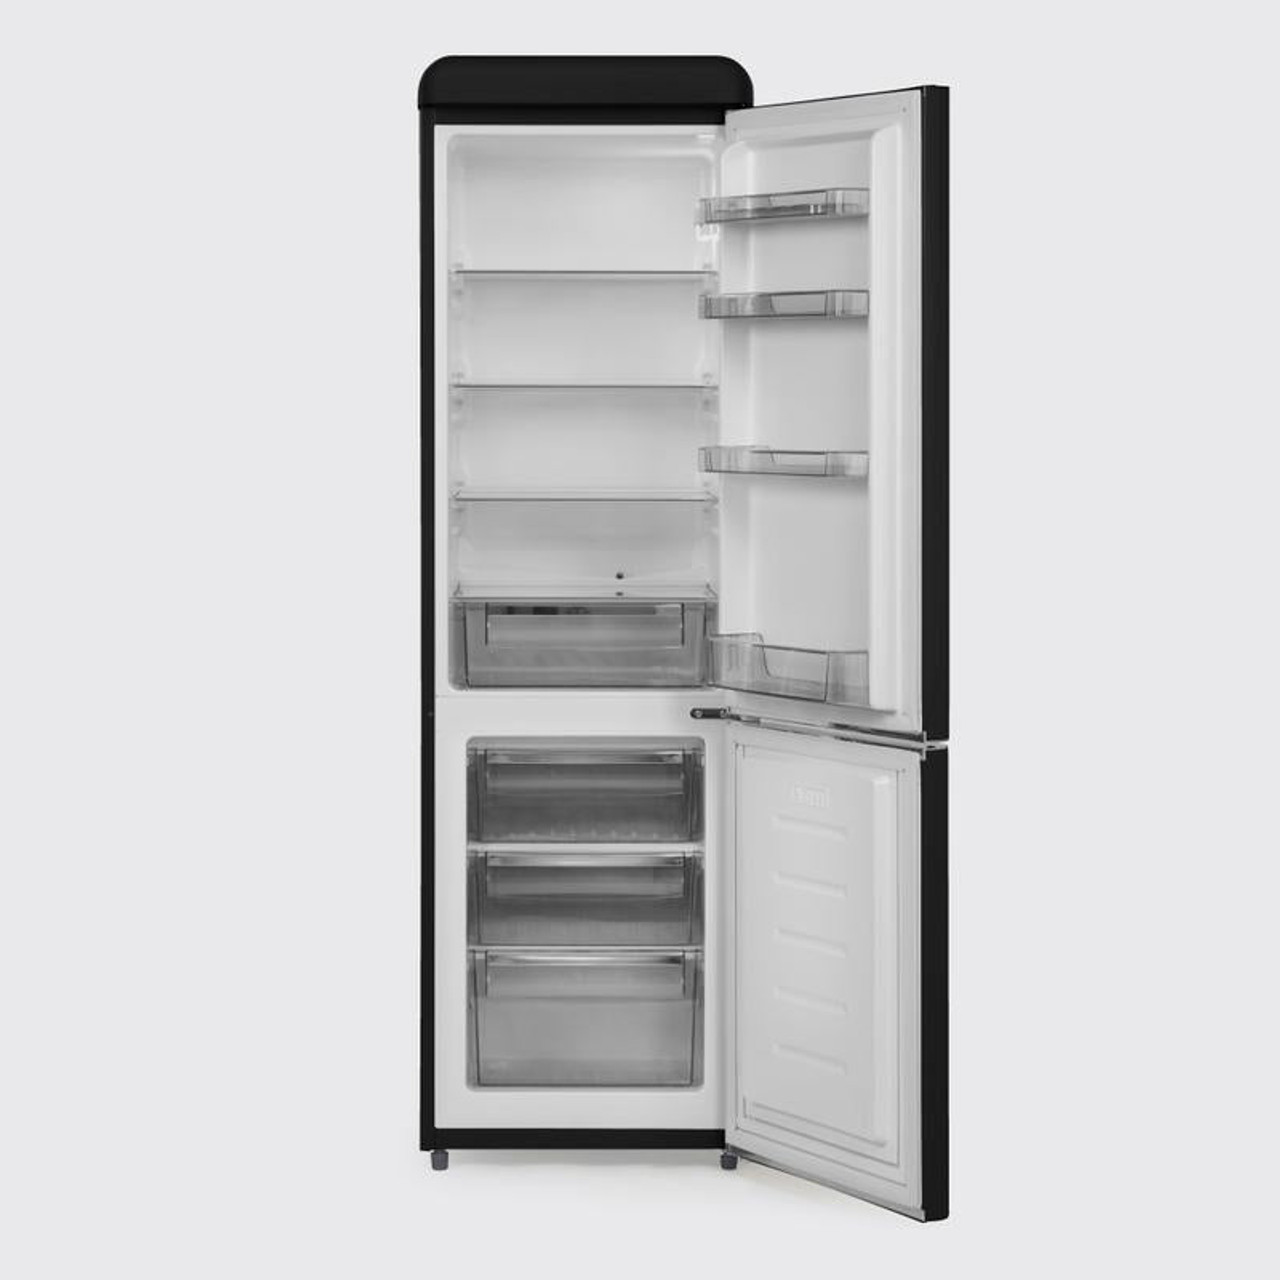 Swan Retro fridge freezer review 2019 – model SR11020BN